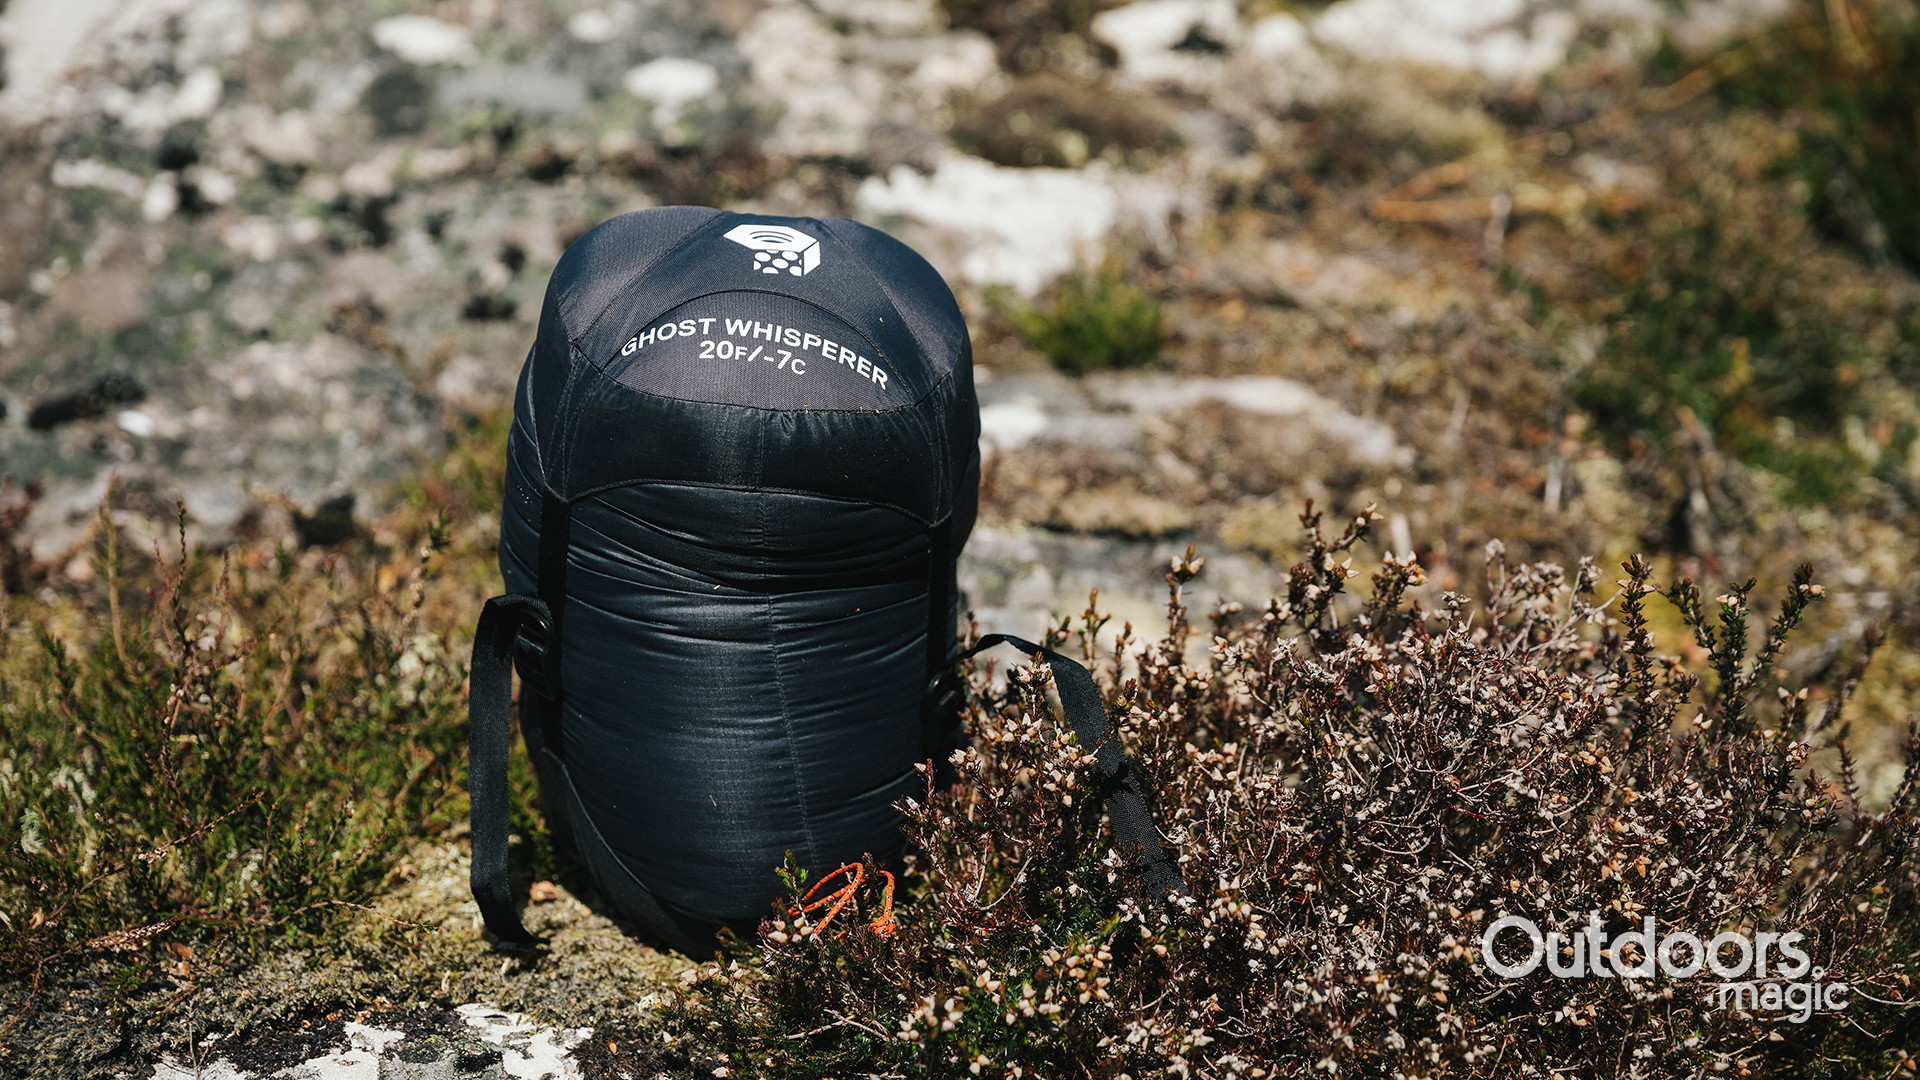 Mountain Hardwear Ghost Whisperer 40F Sleeping Bag | Review